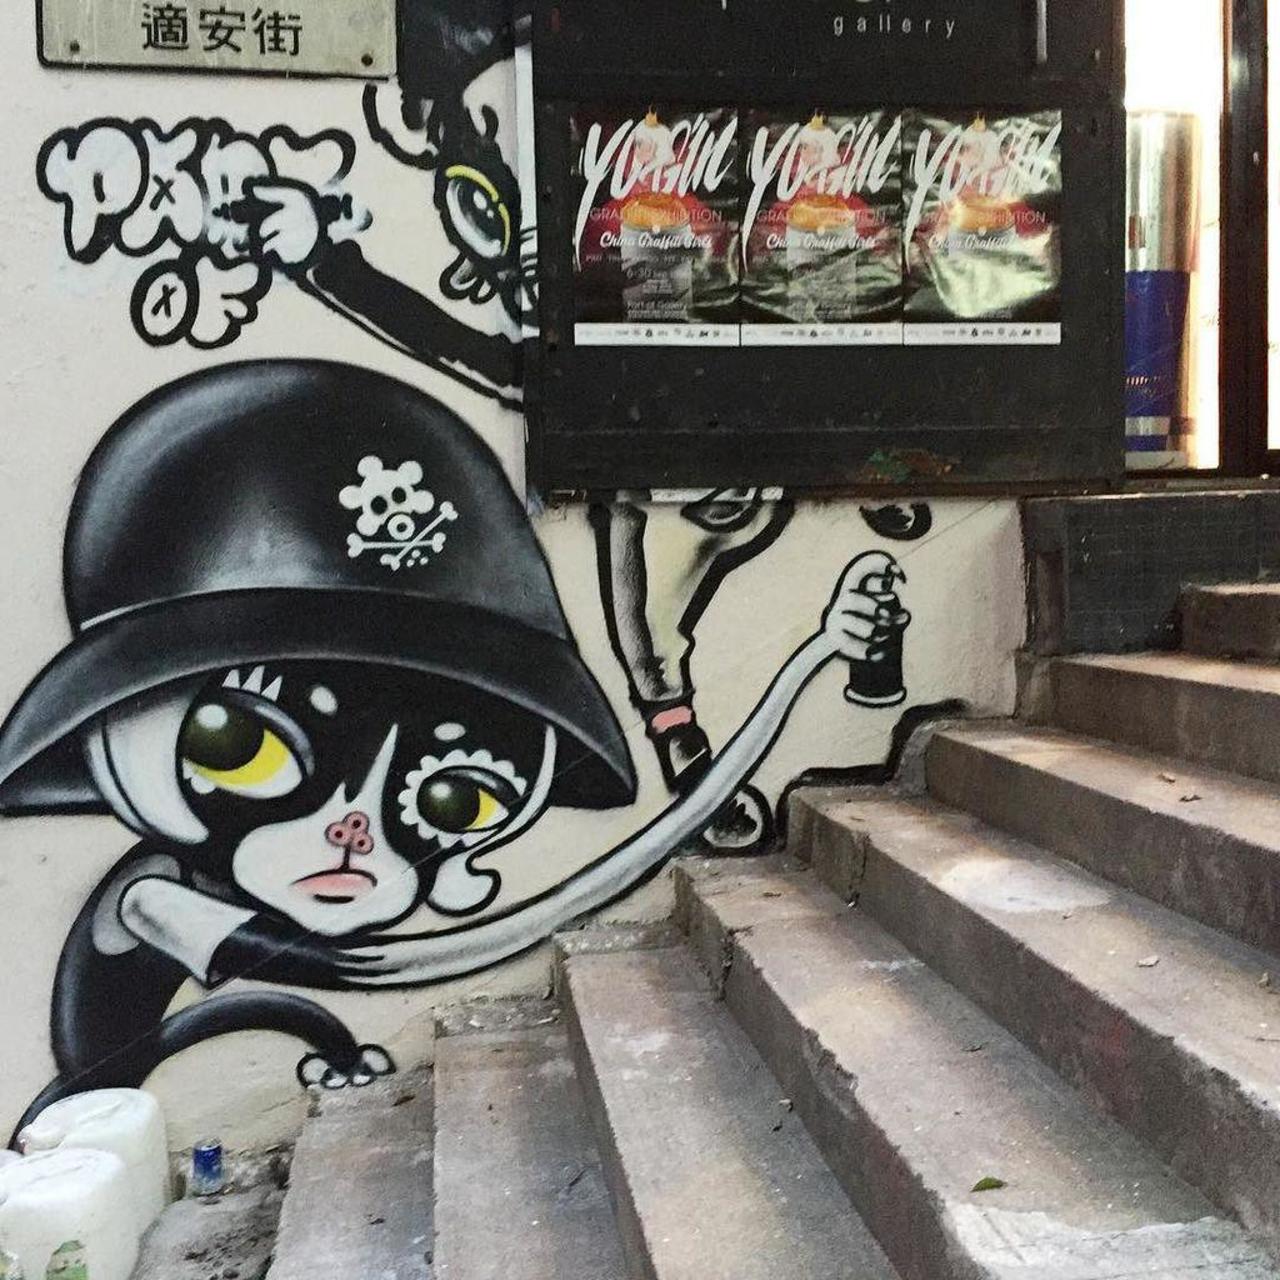 RT @artpushr: via #barbieszeman "http://ift.tt/1QKKdgW" #graffiti #streetart http://t.co/o5V4iQrTyt